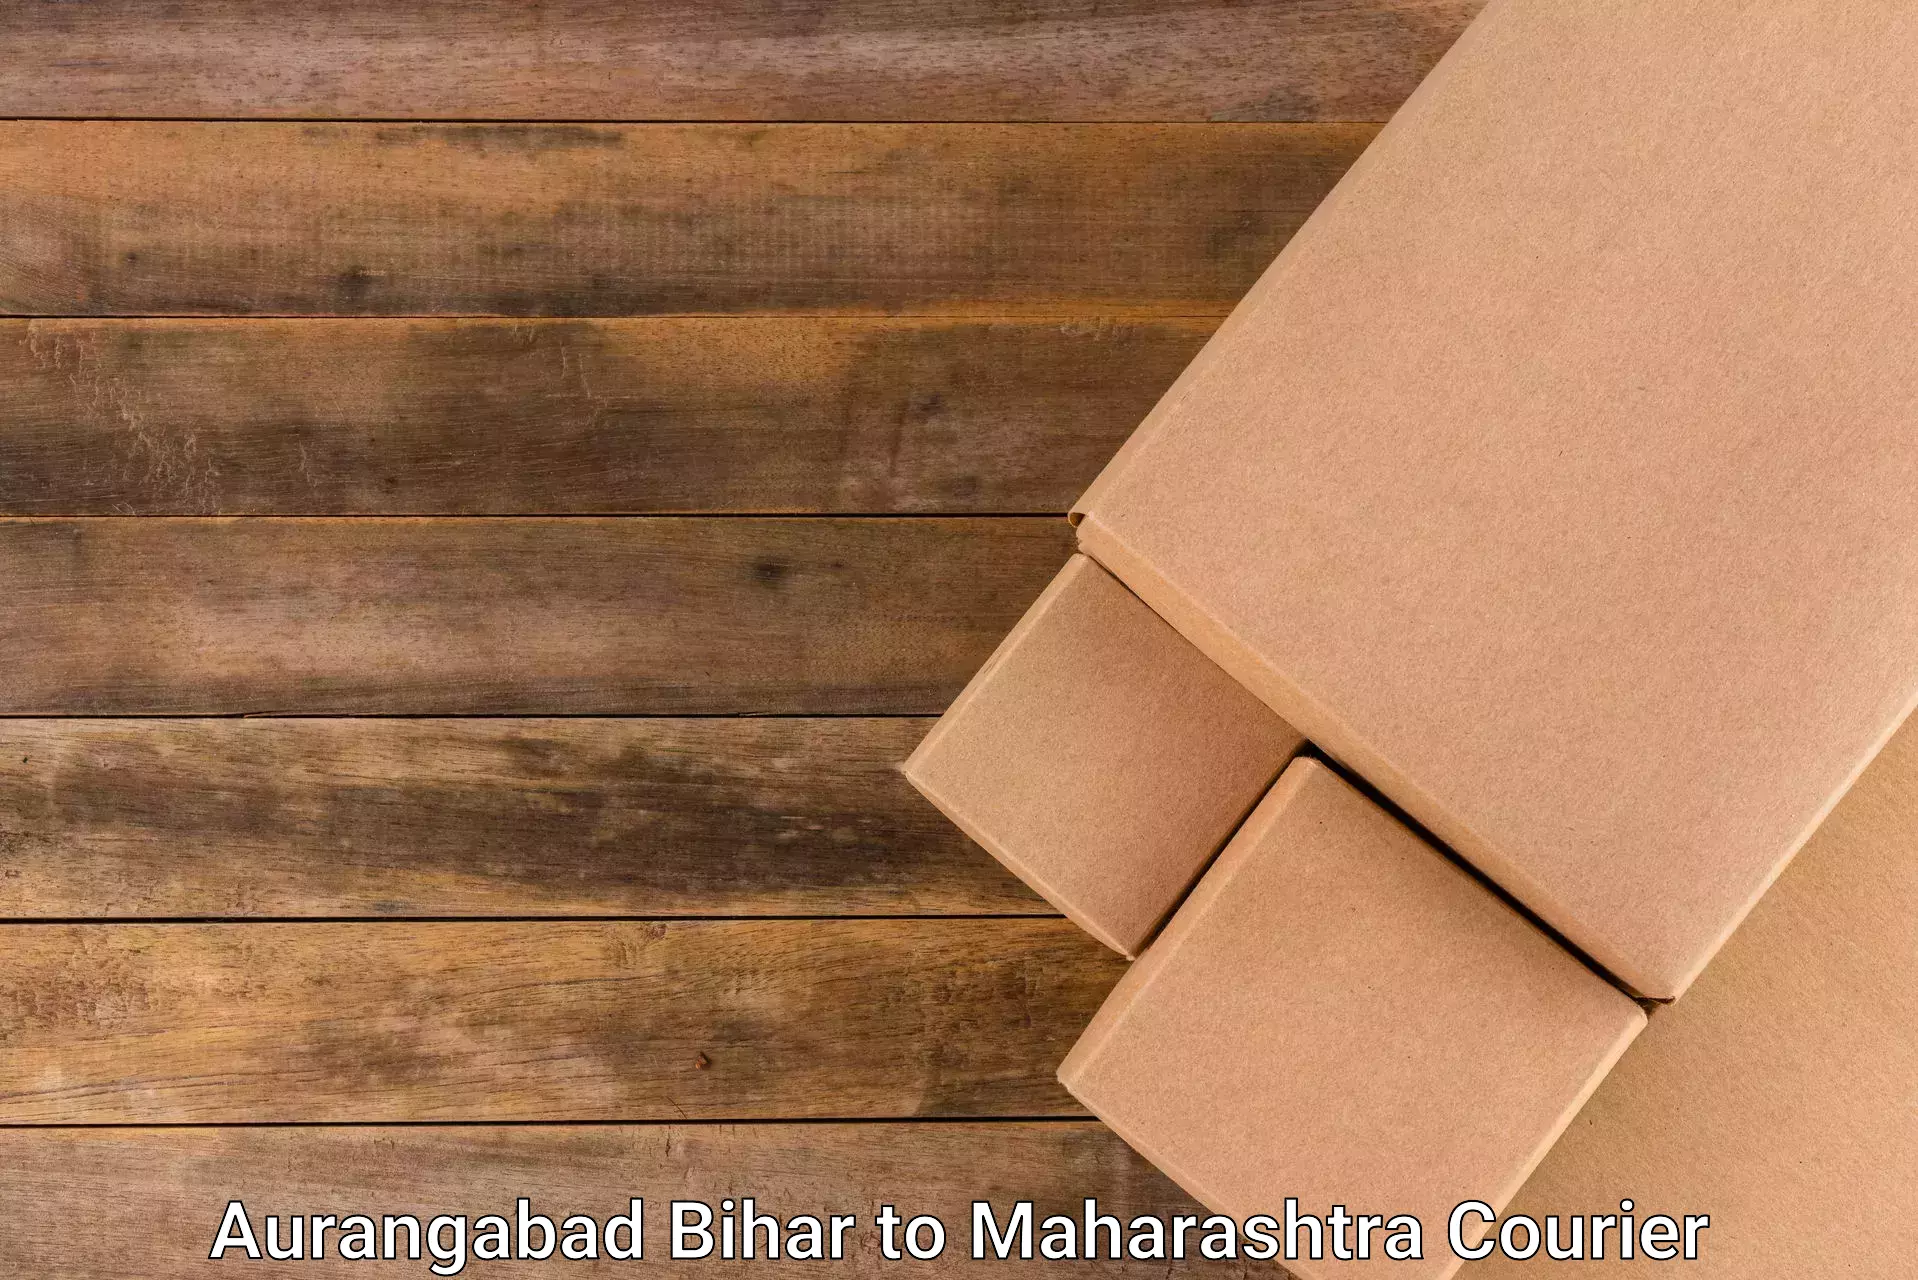 Business delivery service in Aurangabad Bihar to Maharashtra